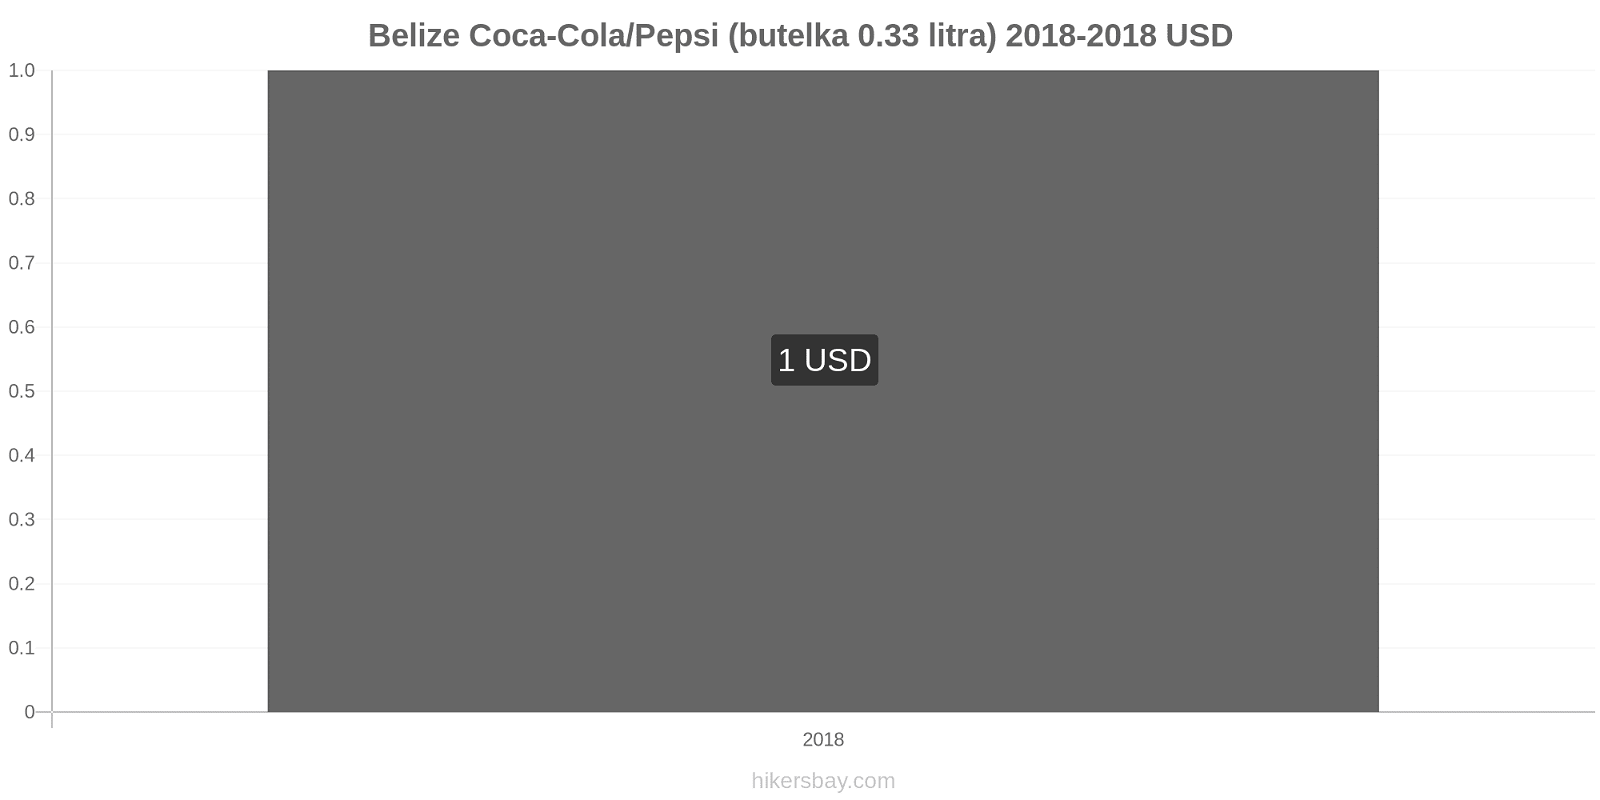 Belize zmiany cen Coca-Cola/Pepsi (butelka 0.33 litra) hikersbay.com